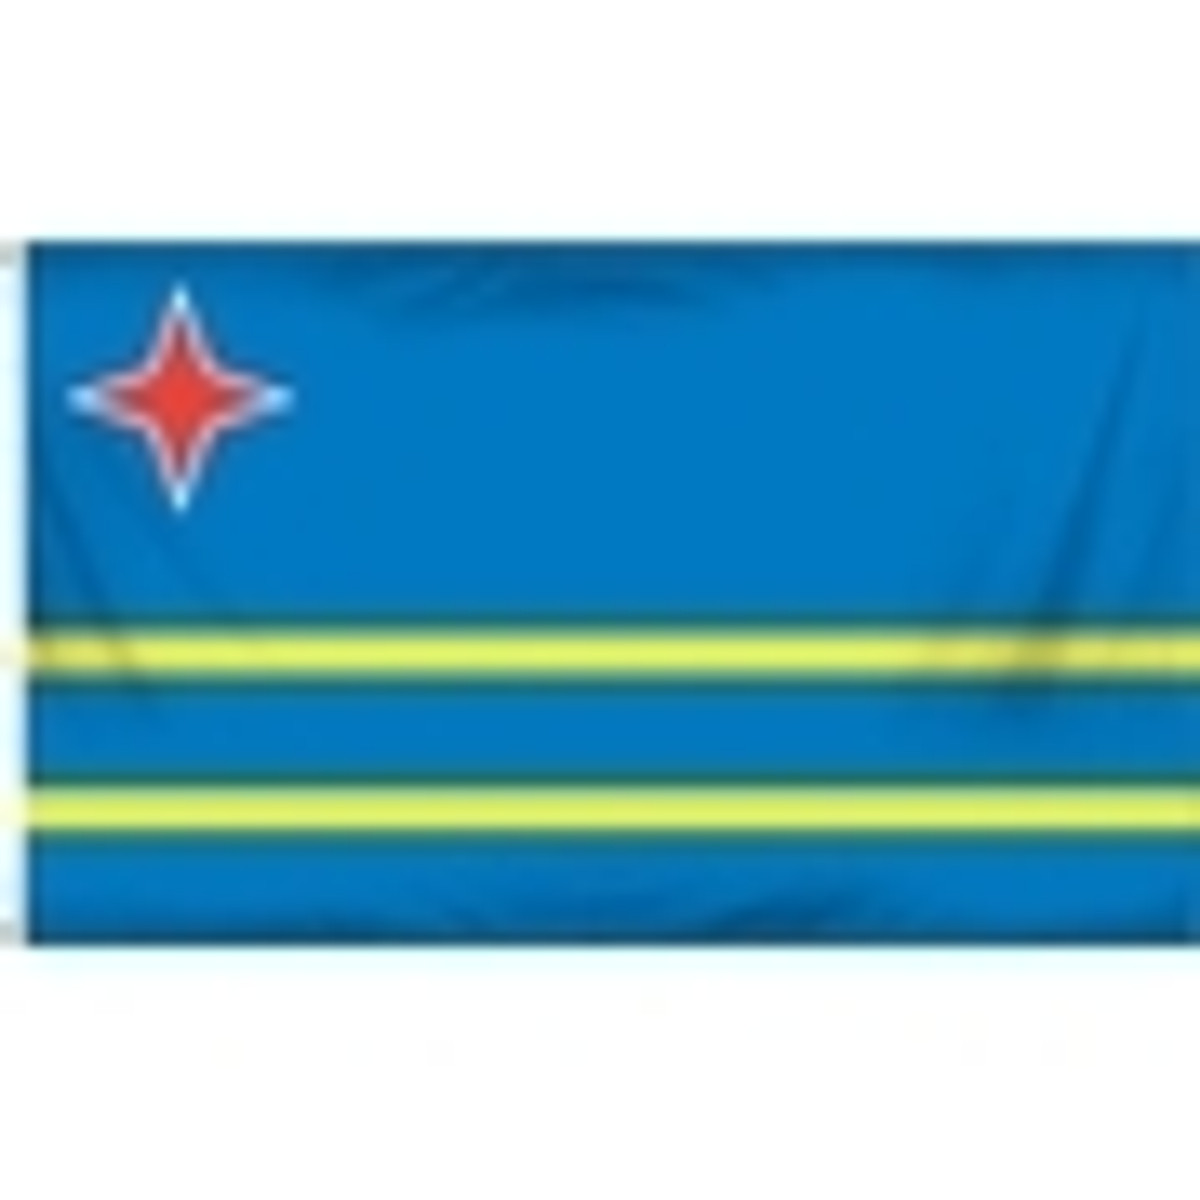 Aruba - Aruban Flags